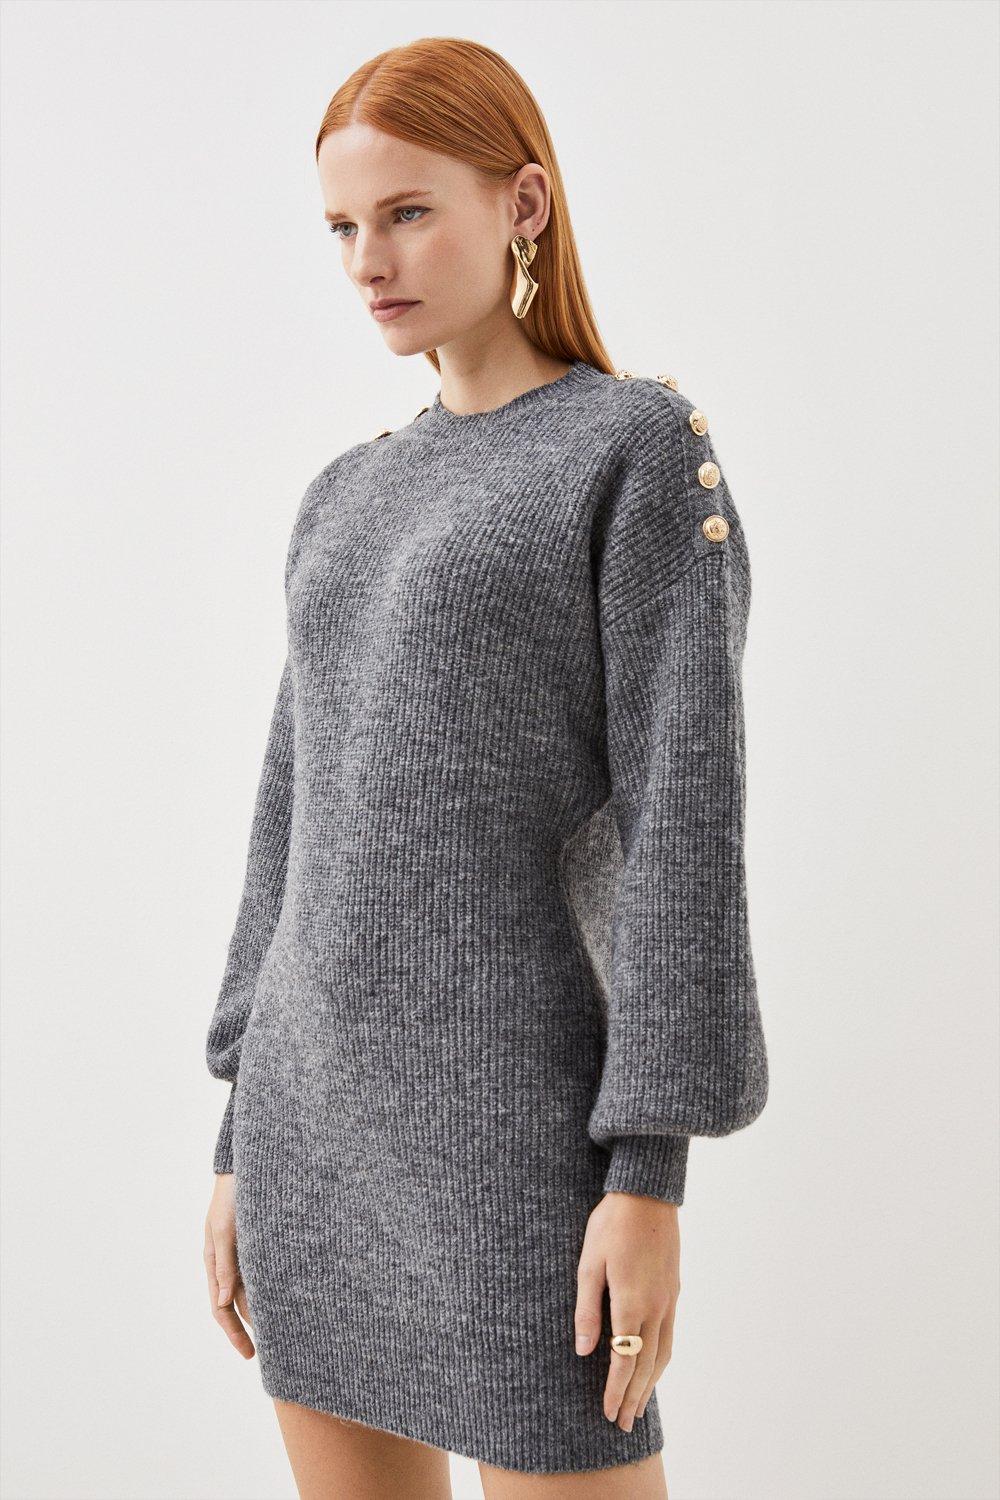 andmary Karen knit set mini dress Gray - ワンピース